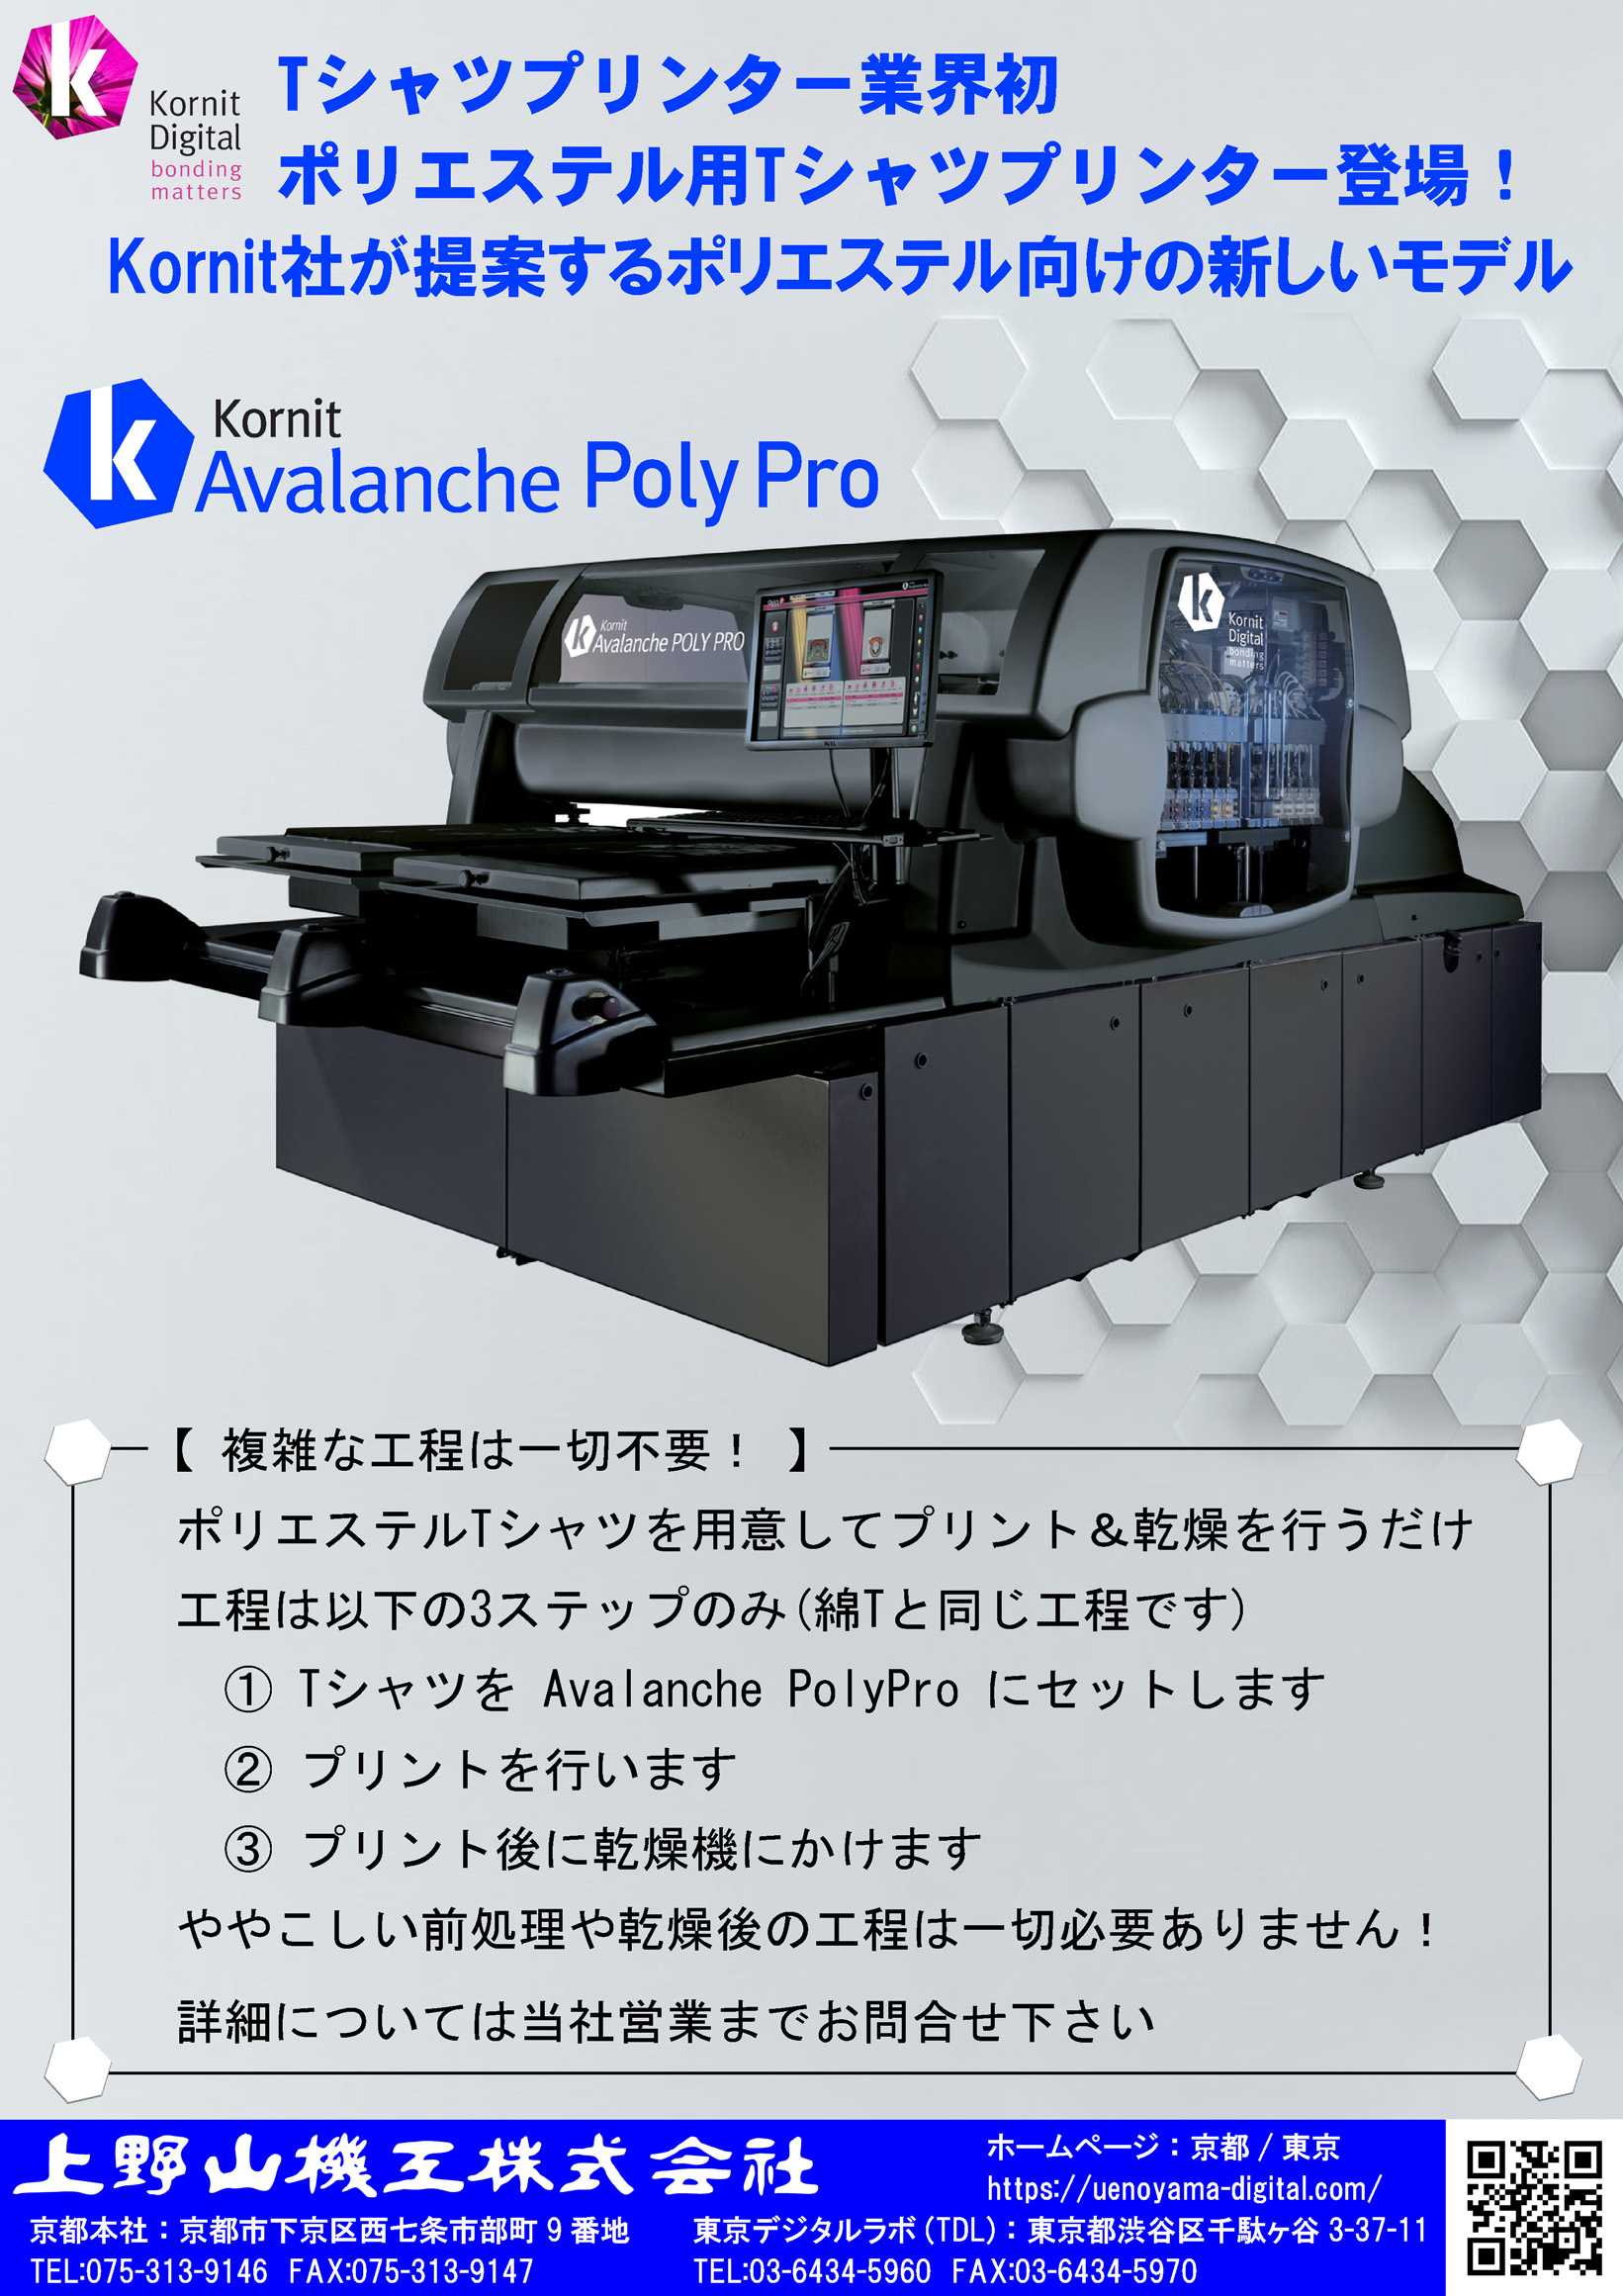 Kornit Avalanche PolyProを製品紹介に追加しました